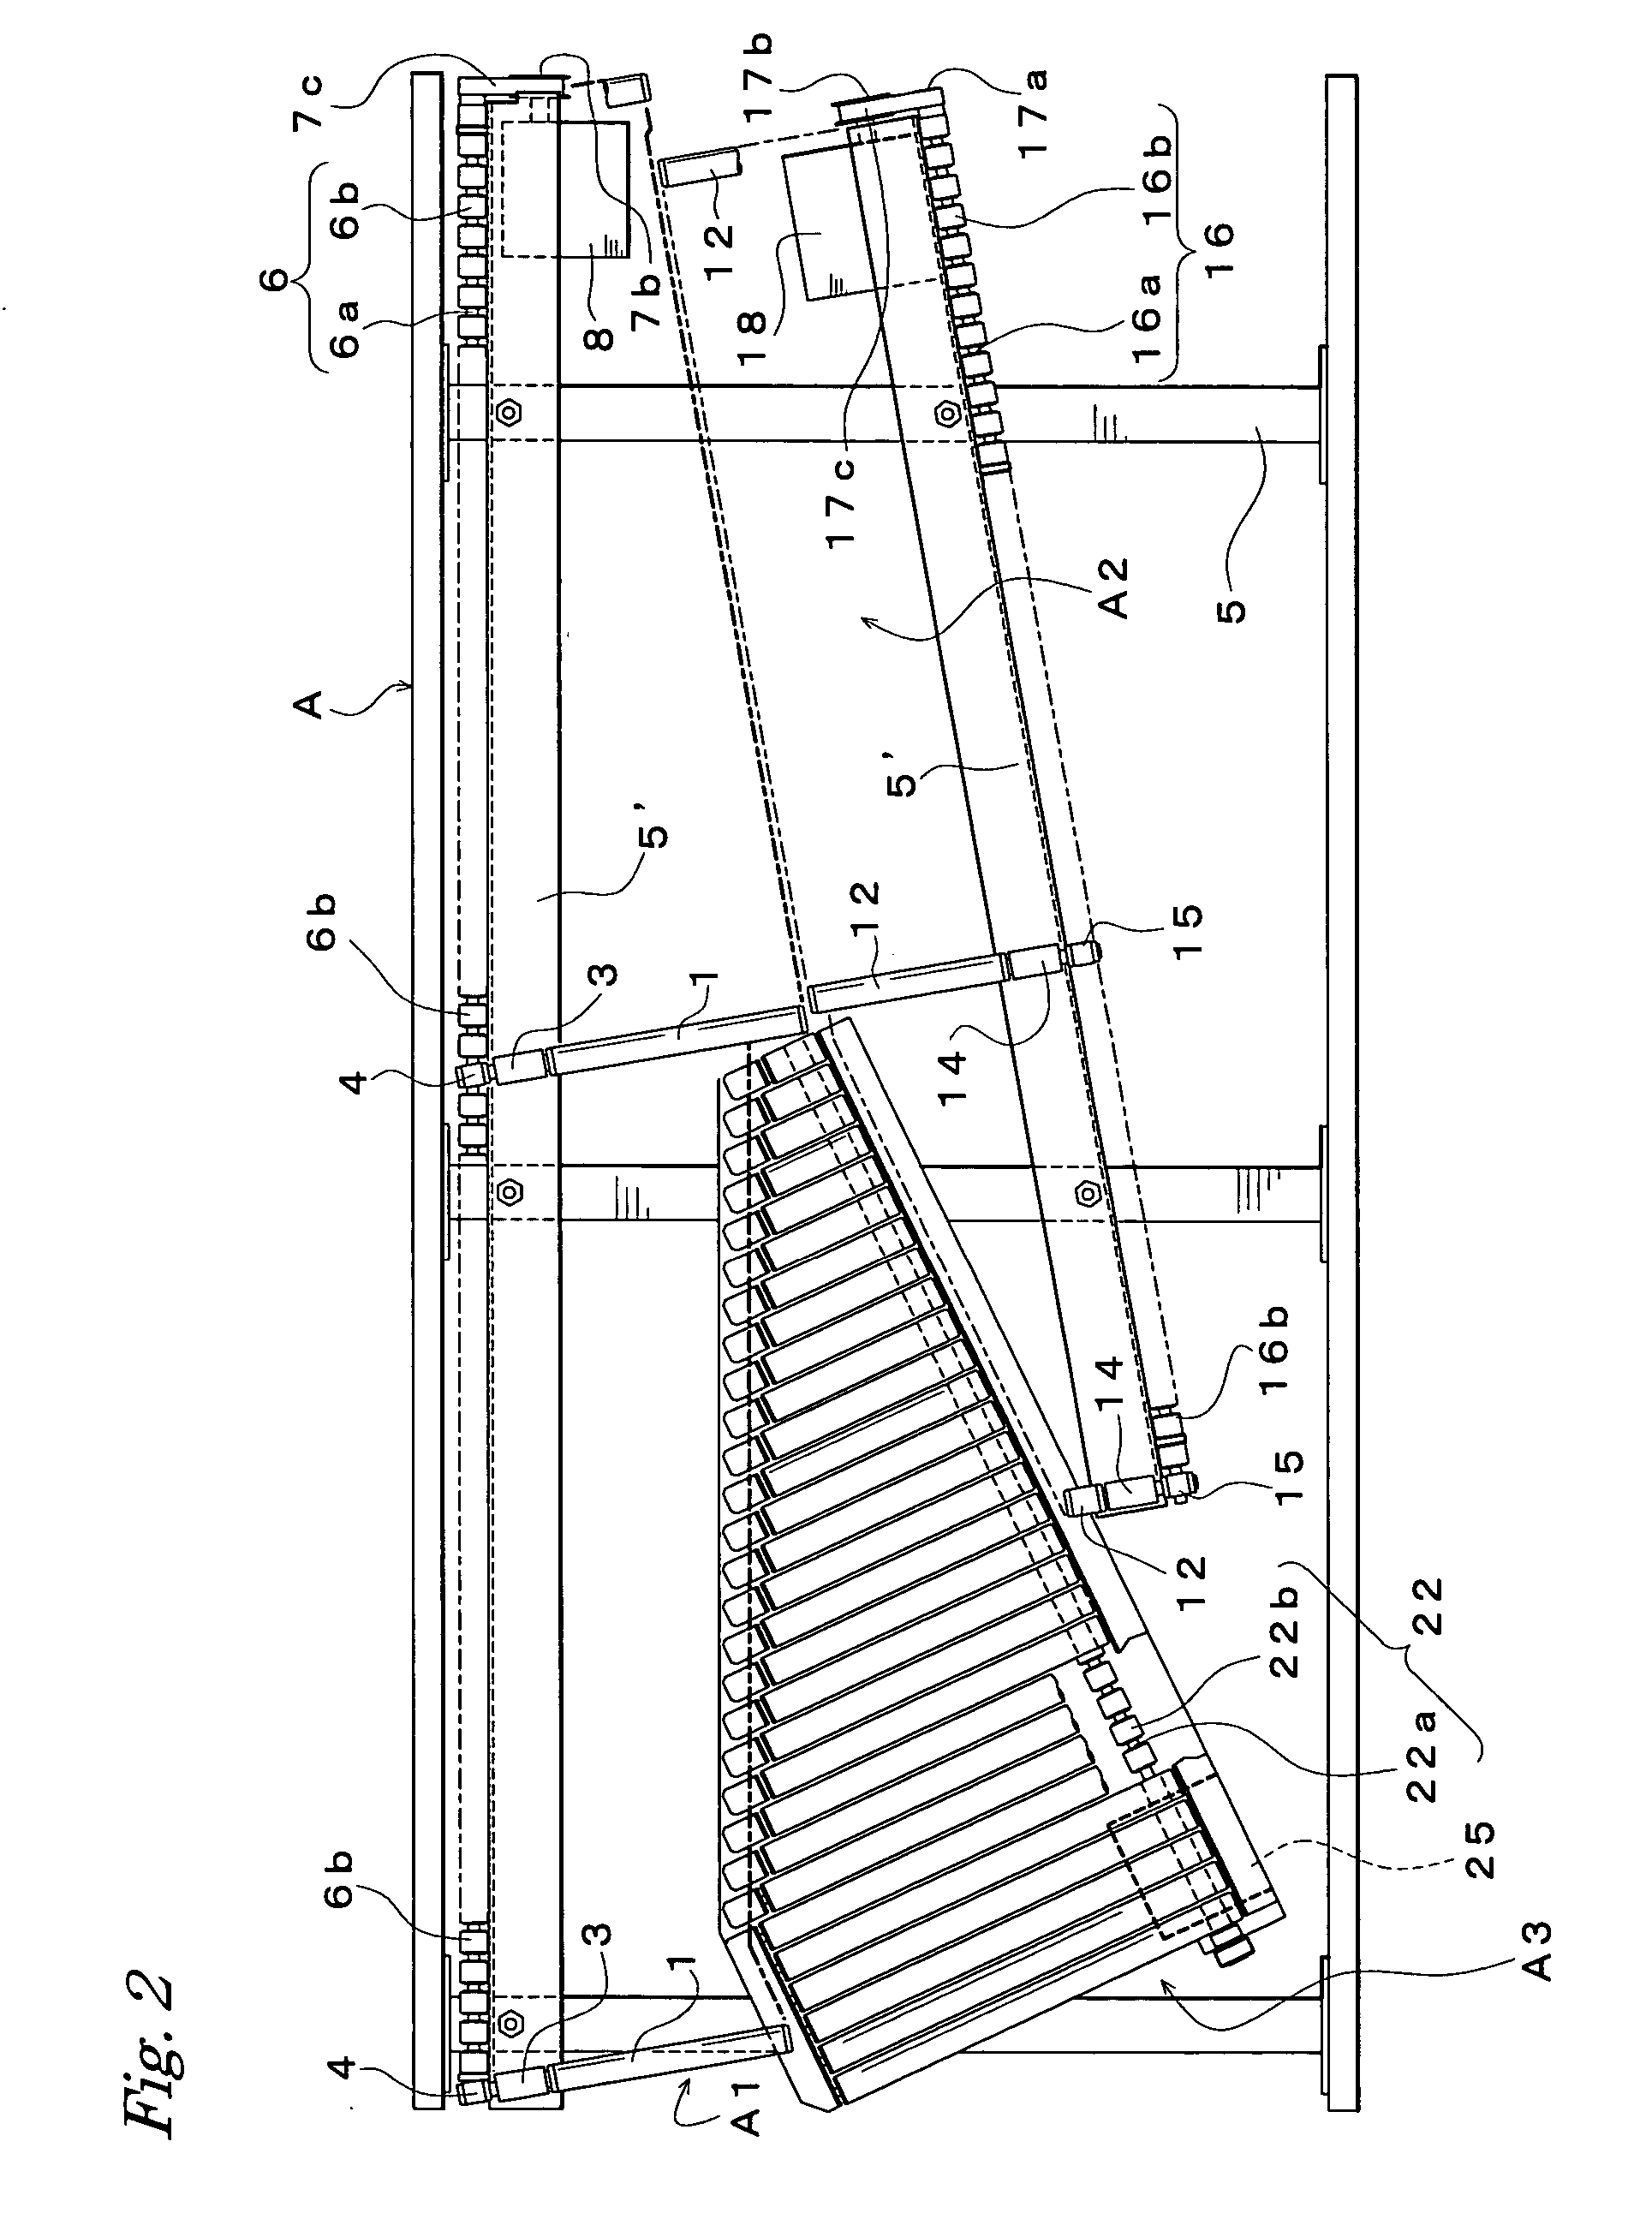 Circulation type line-up conveying apparatus